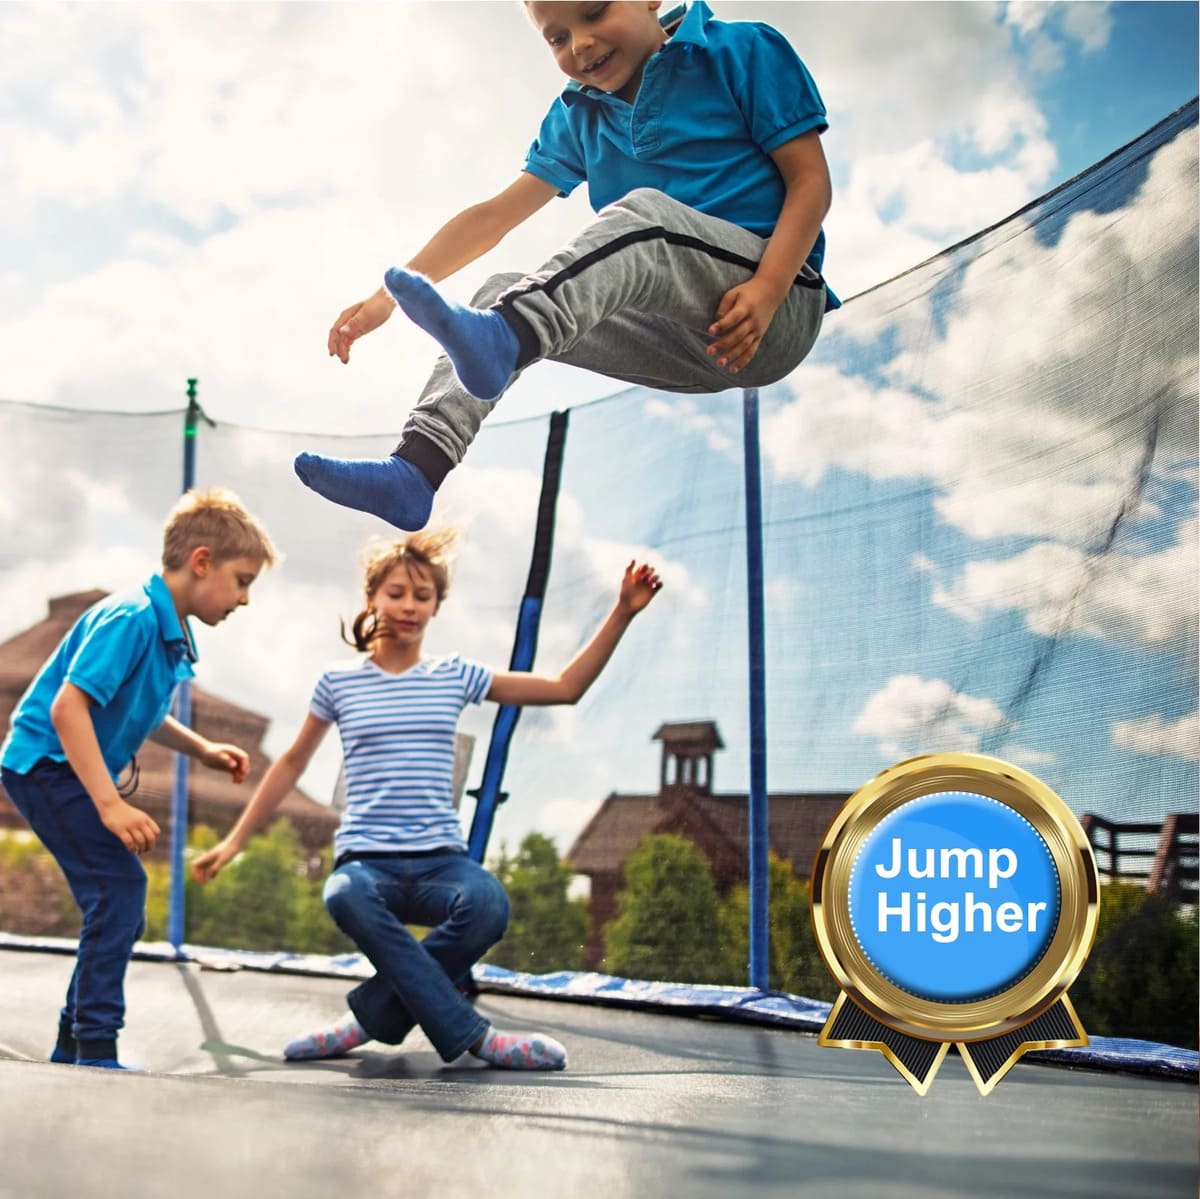 SEGMART 10ft Trampoline for Kids with Basketball Hoop and Enclosure Net de Walmart